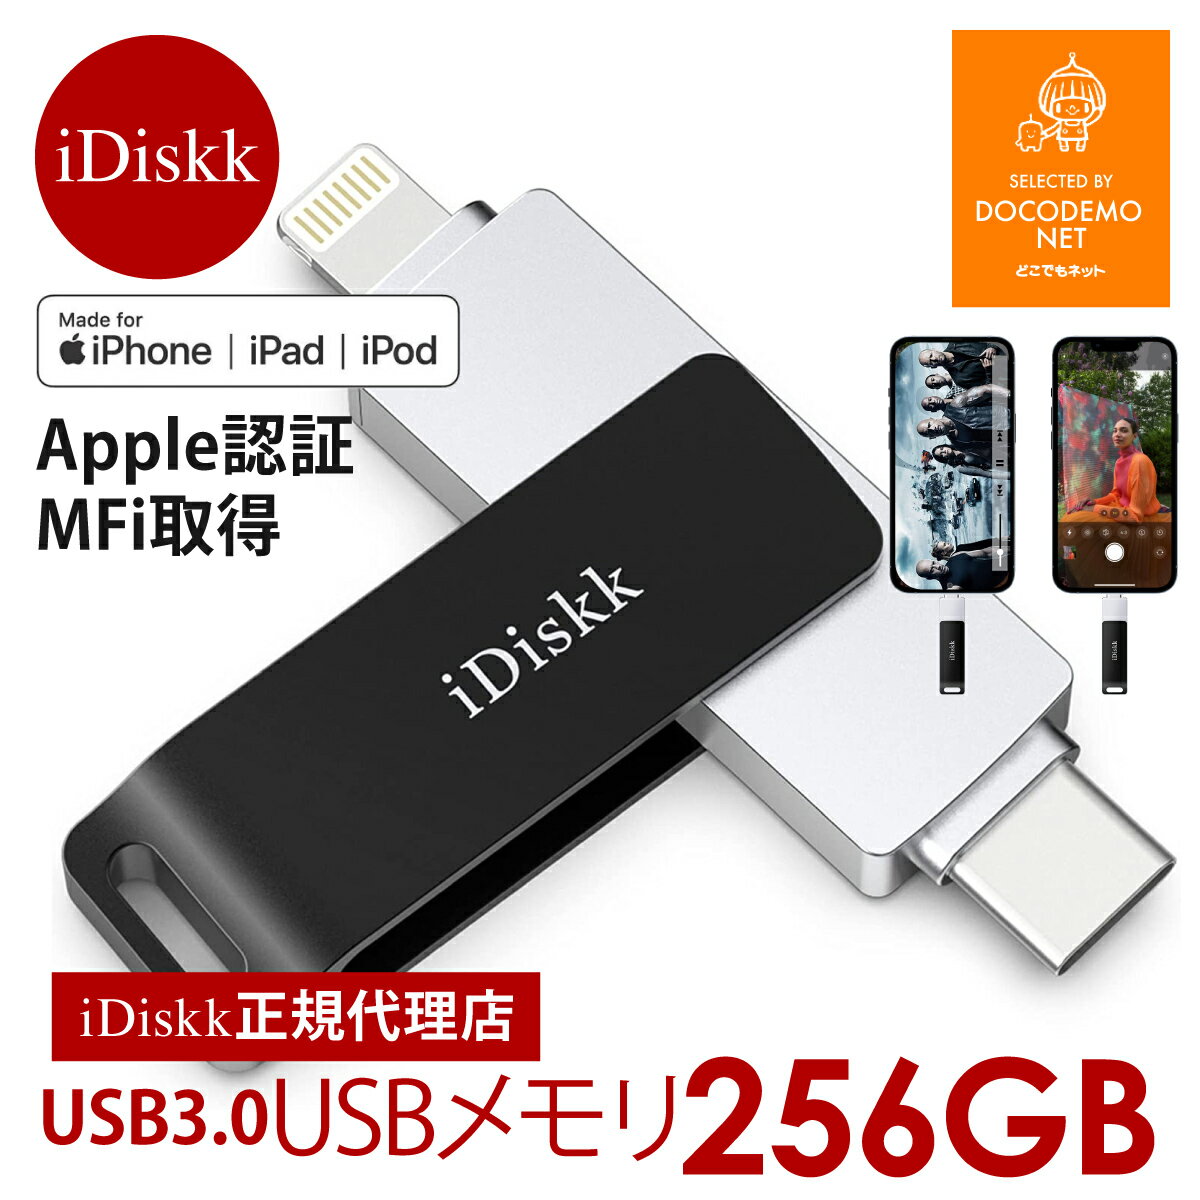 【 iDiskk正式代理店】idiskk usbメモリー Apple認証 MFI認証品 MFI取得 iphone usbメモリ バックアップ iDiskk フラ…